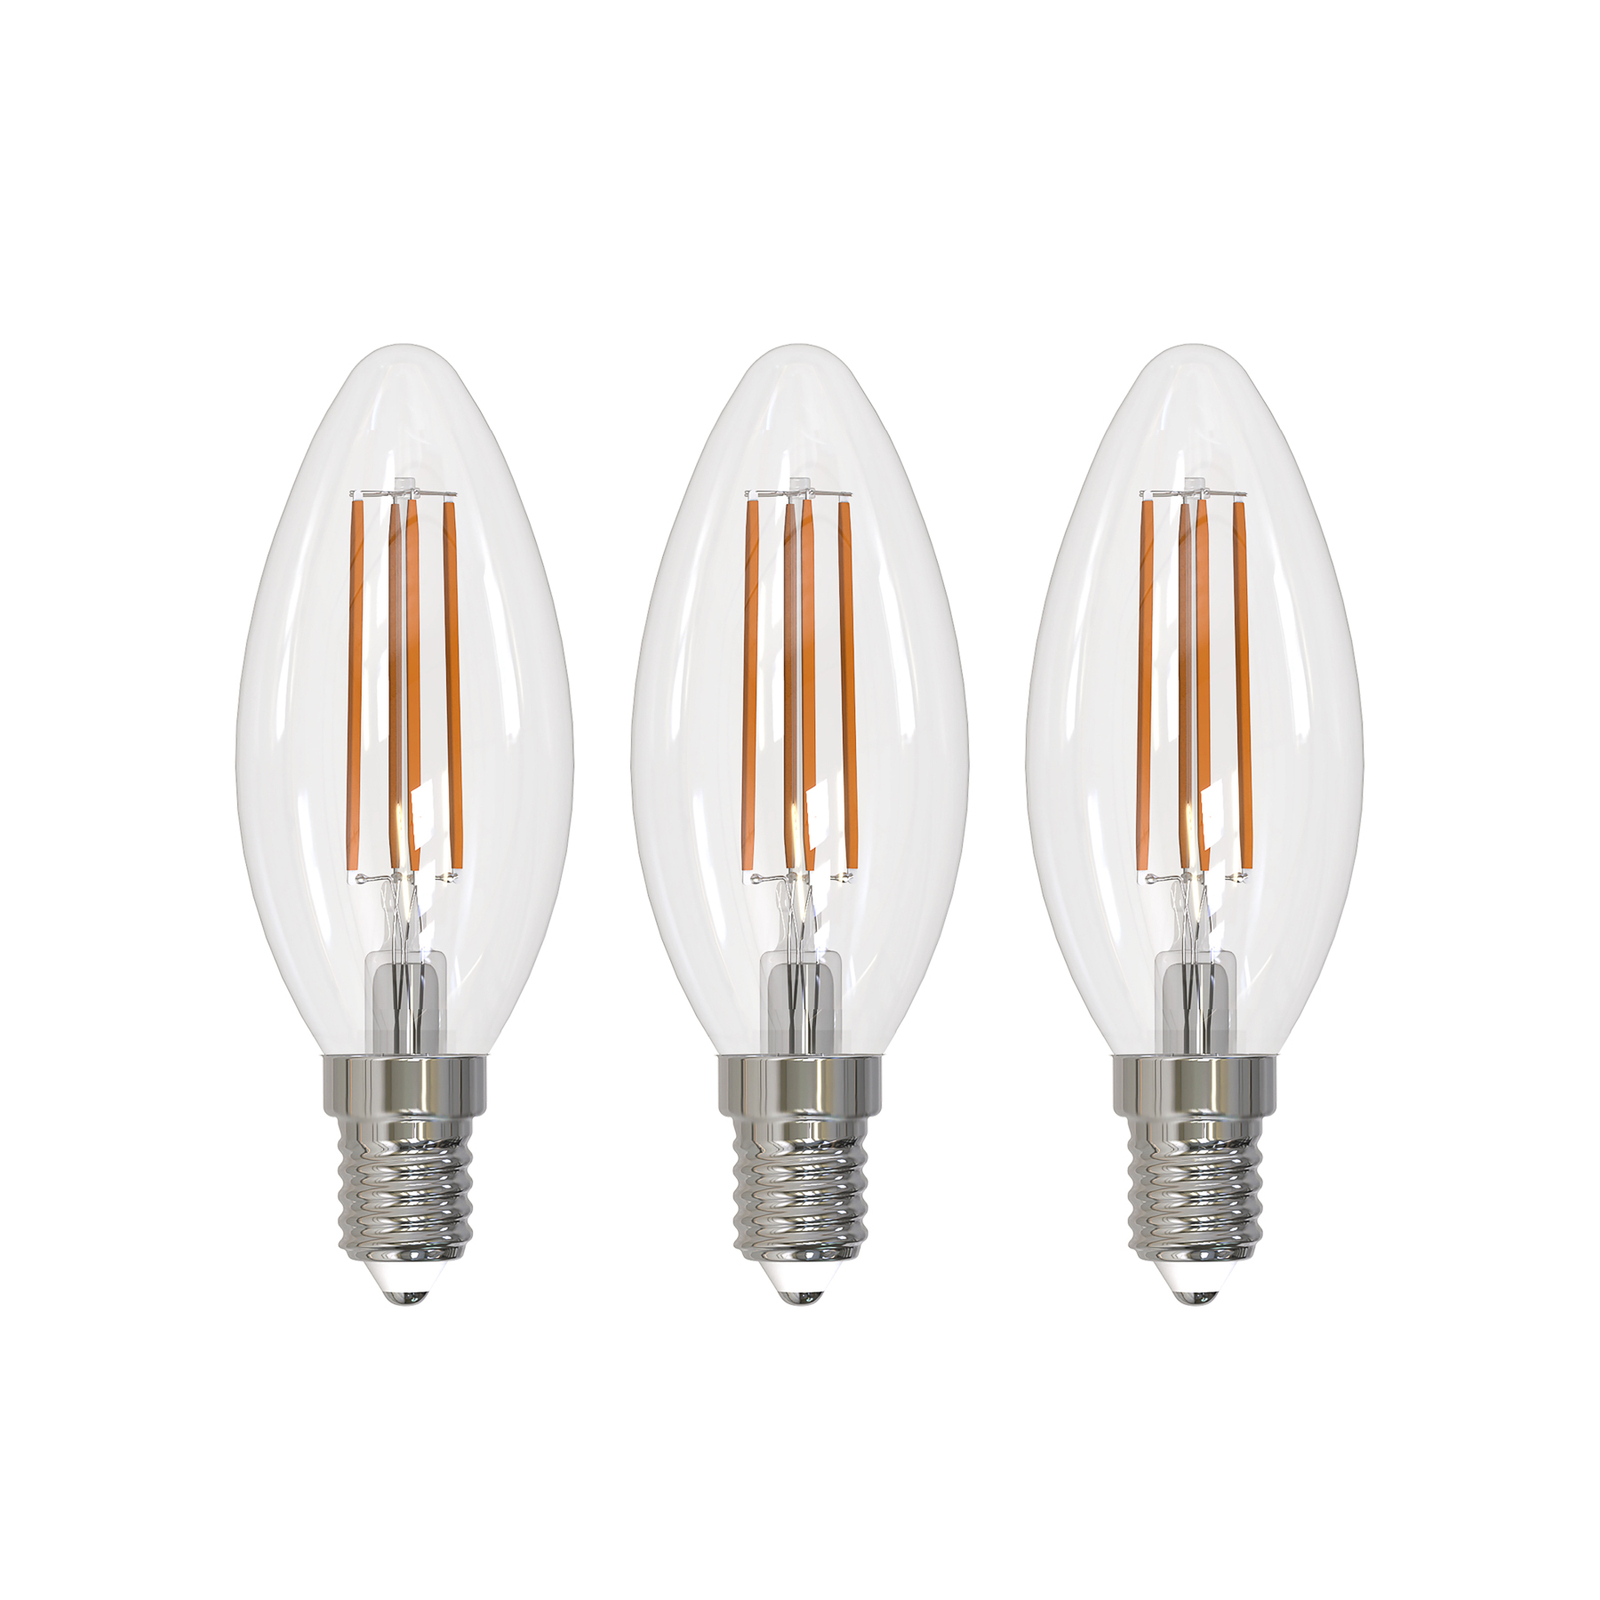 Arcchio LED-filamentpære E14 stearinlys, sæt med 3, 4000 K